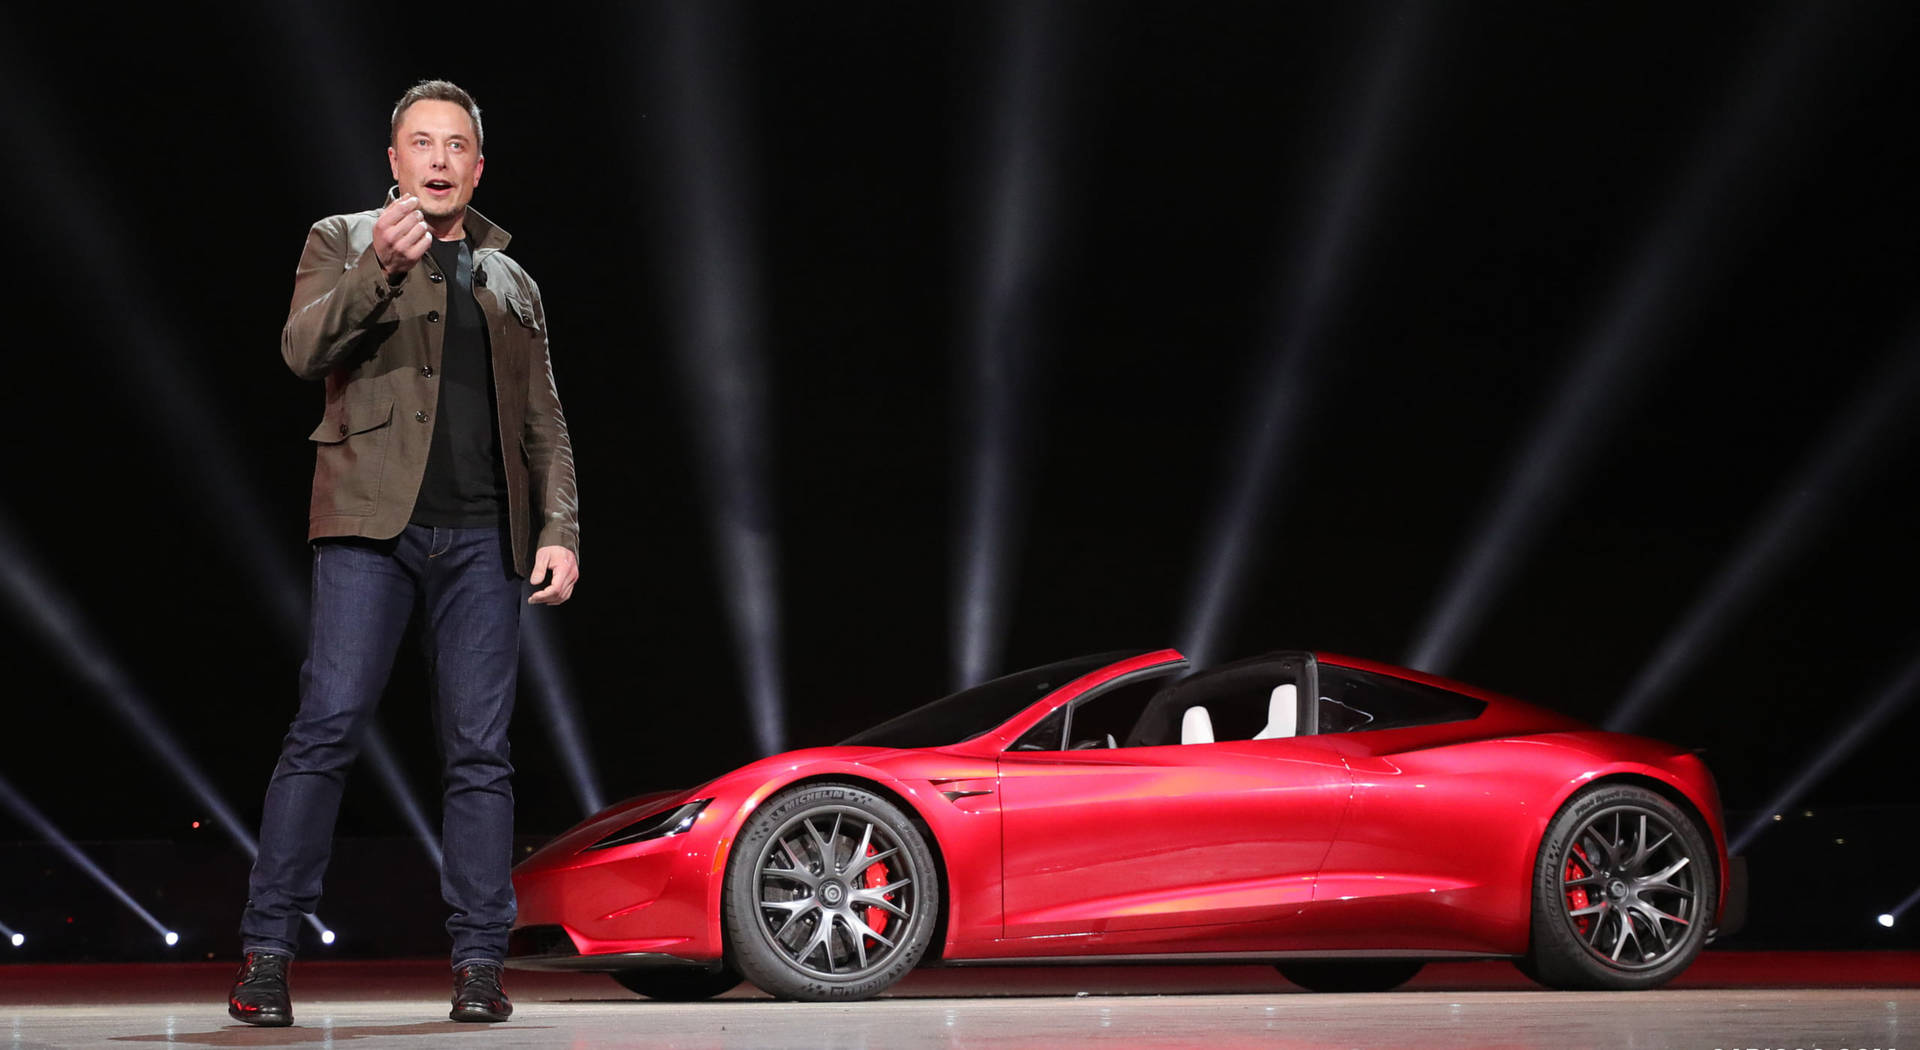 Elon Musk Tesla Roadster Launch 2017 Background